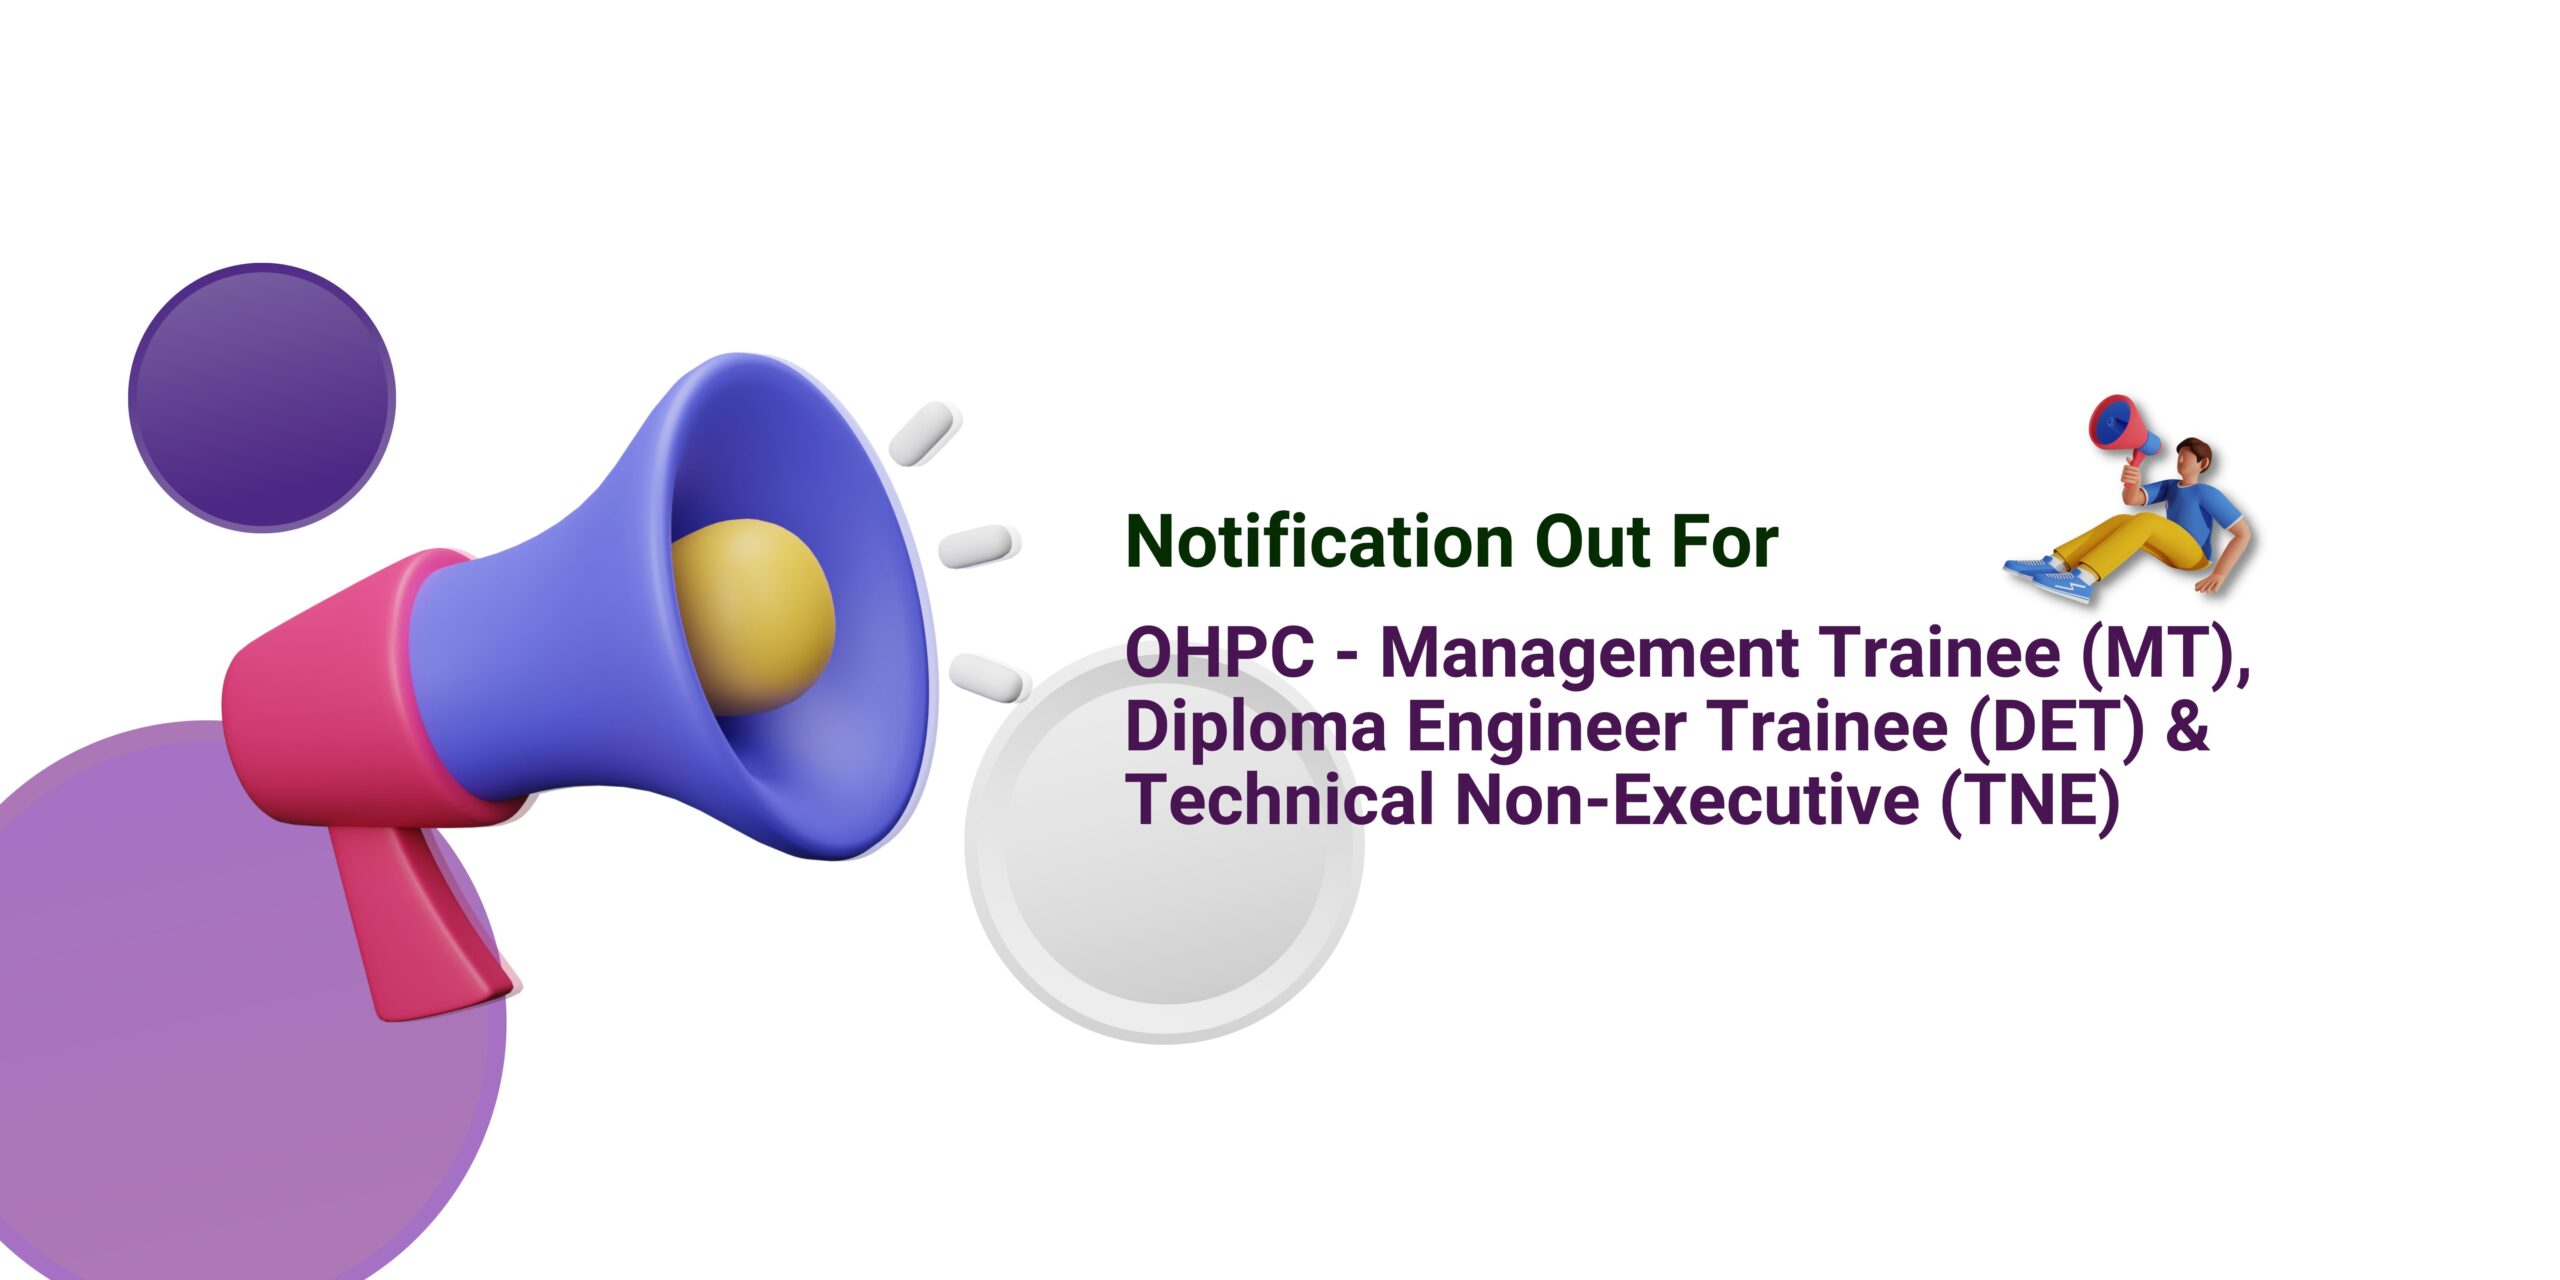 OHPC - Management Trainee (MT), Diploma Engineer Trainee (DET) & Technical Non-Executive (TNE)